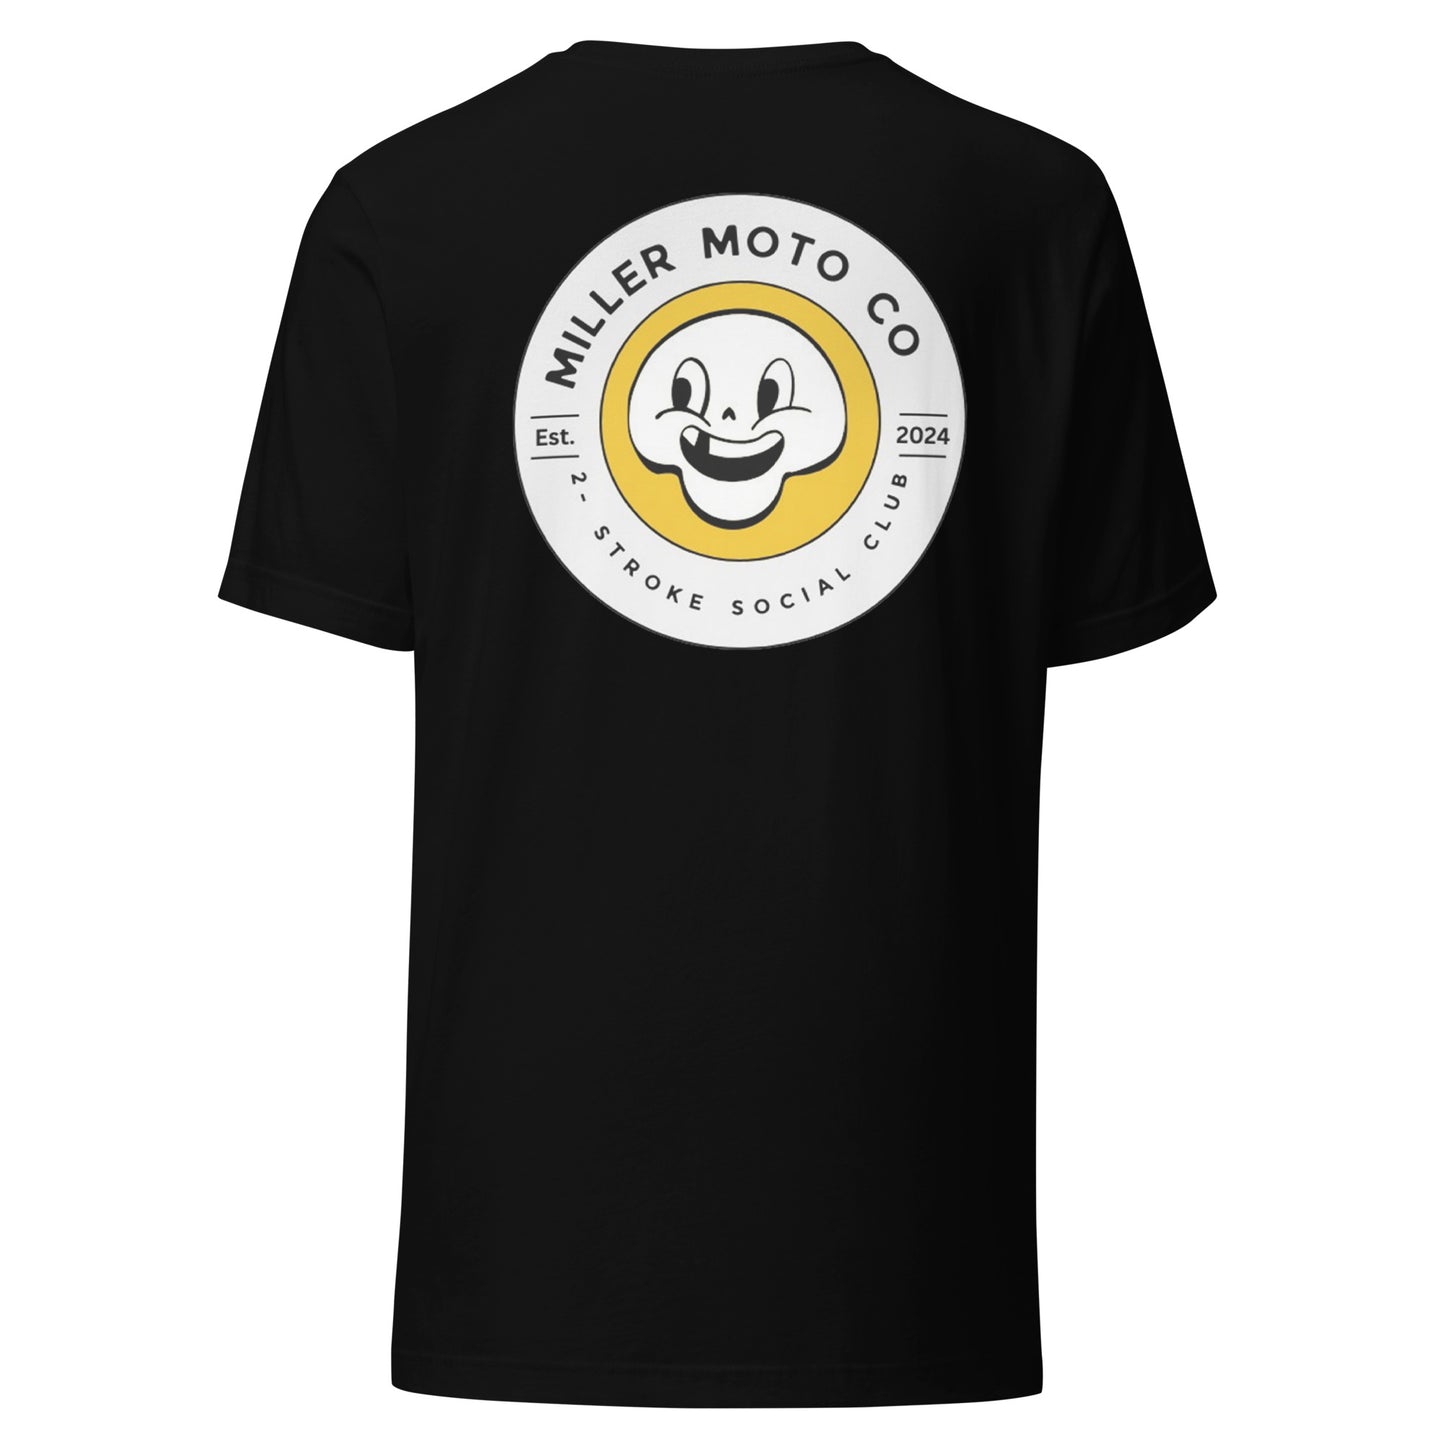 Miller Moto Co. 2-Stroke Social Club T-Shirt